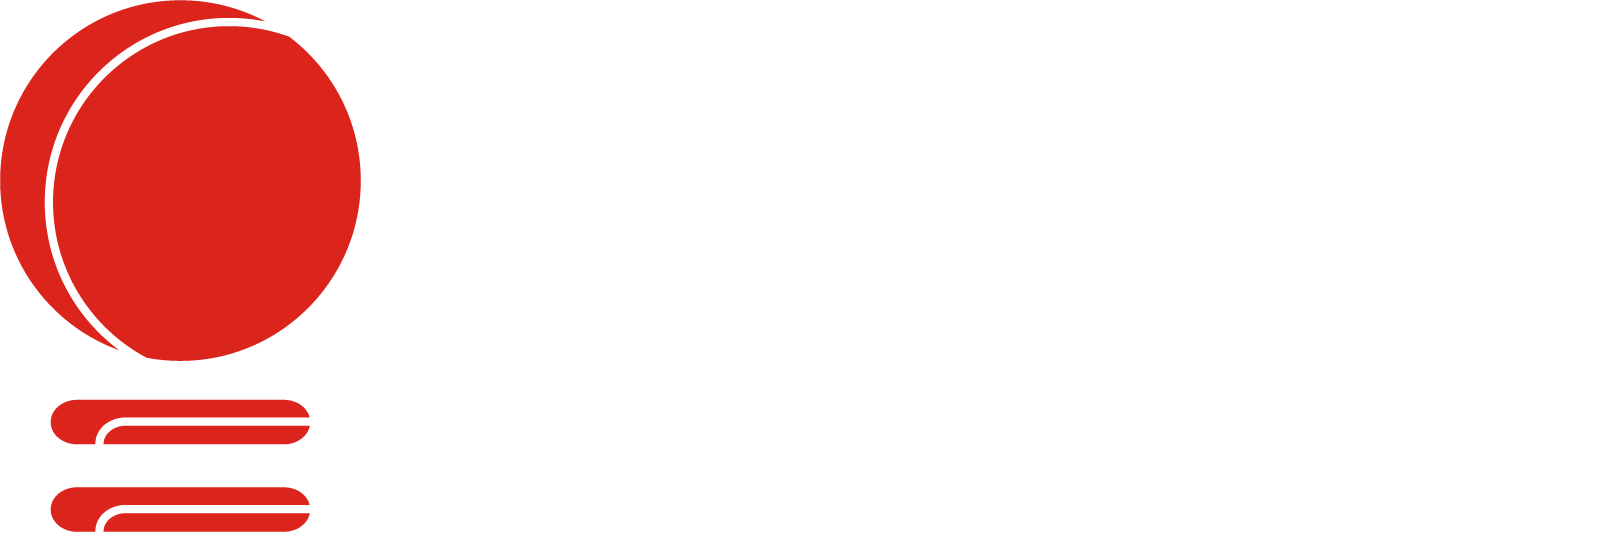 D&J Electrical Ltd.